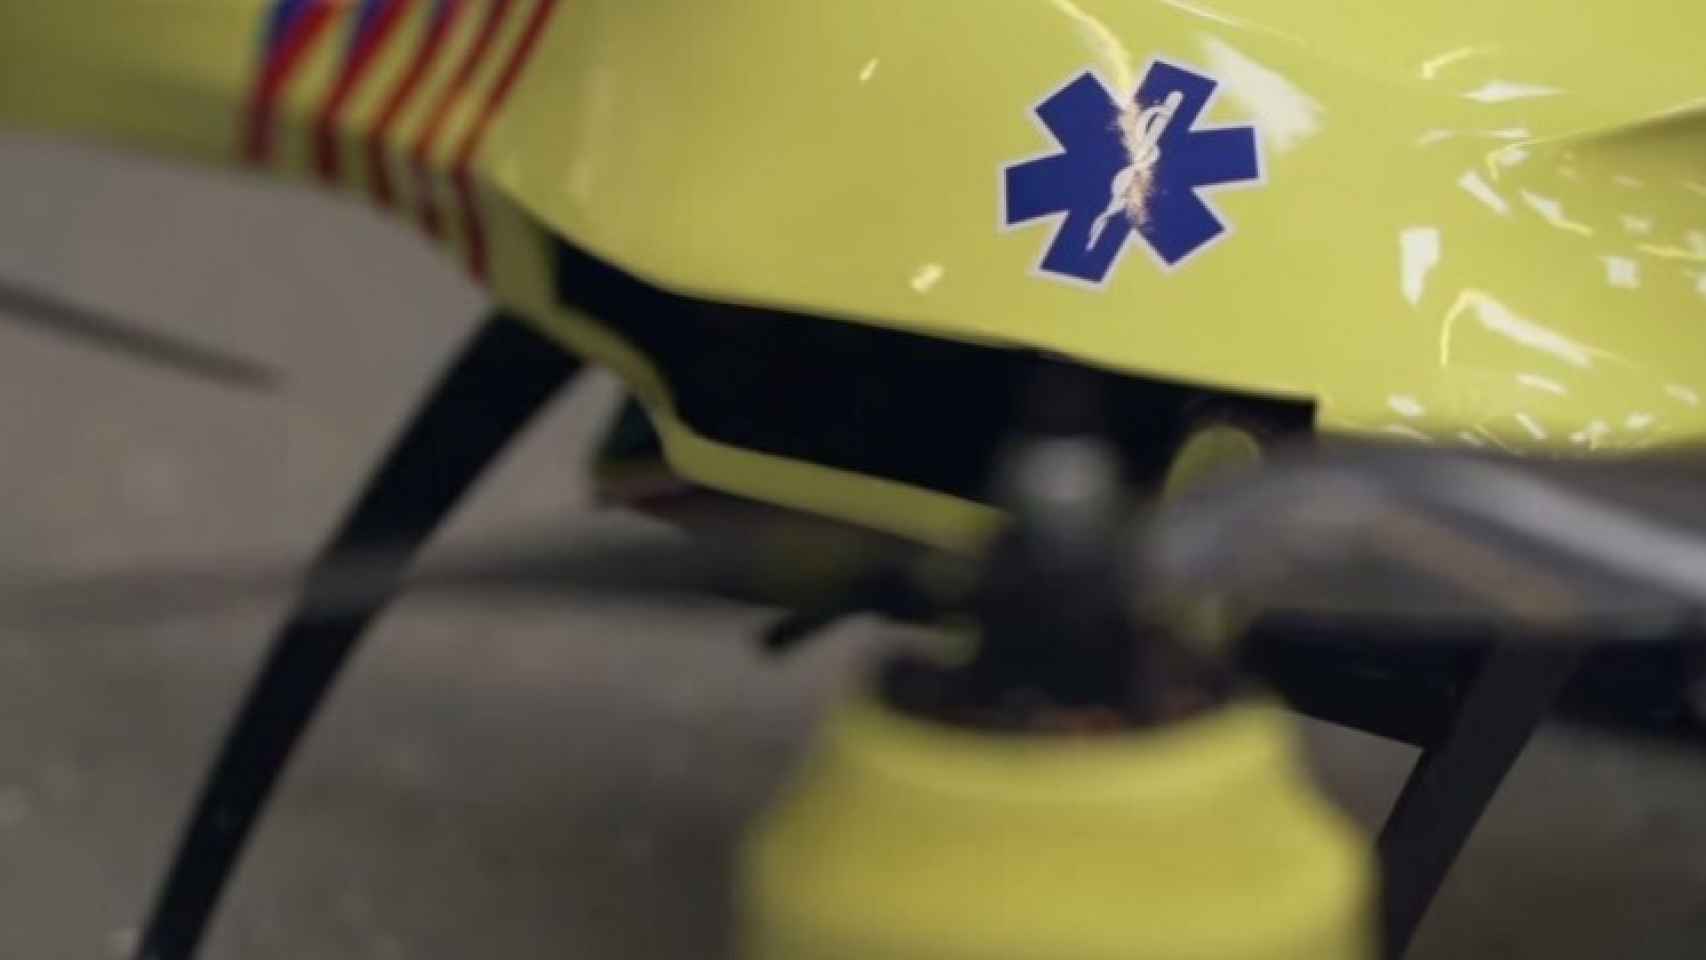 Dron ambulancia